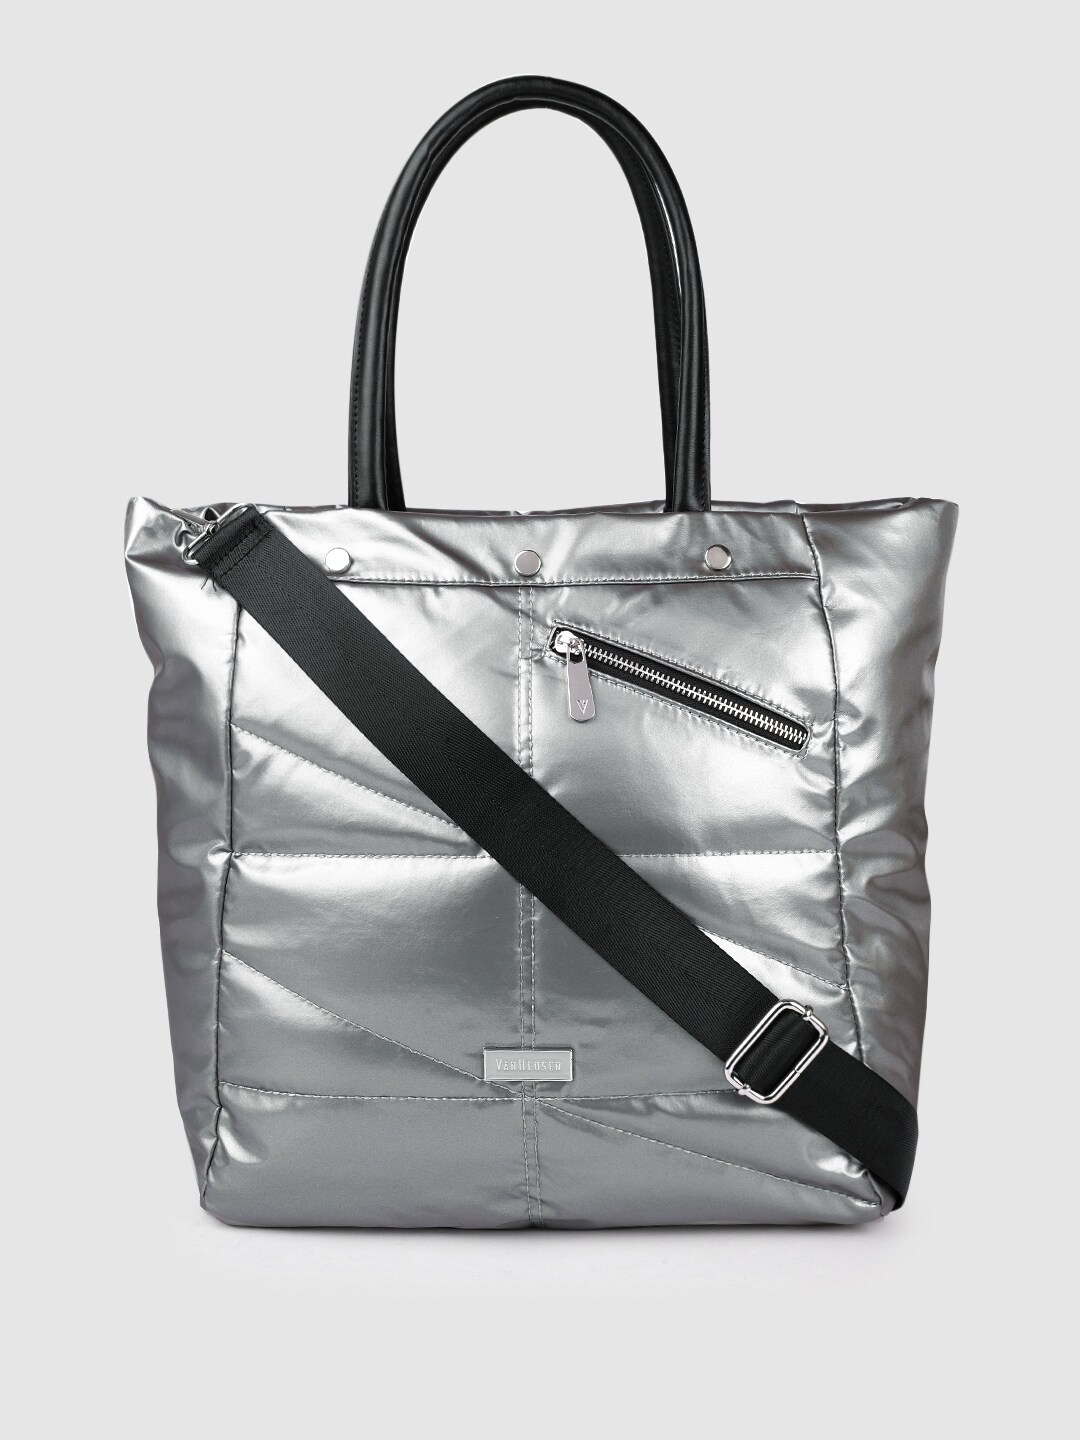 Van Heusen Silver-Toned Solid Structured Handheld Bag Price in India